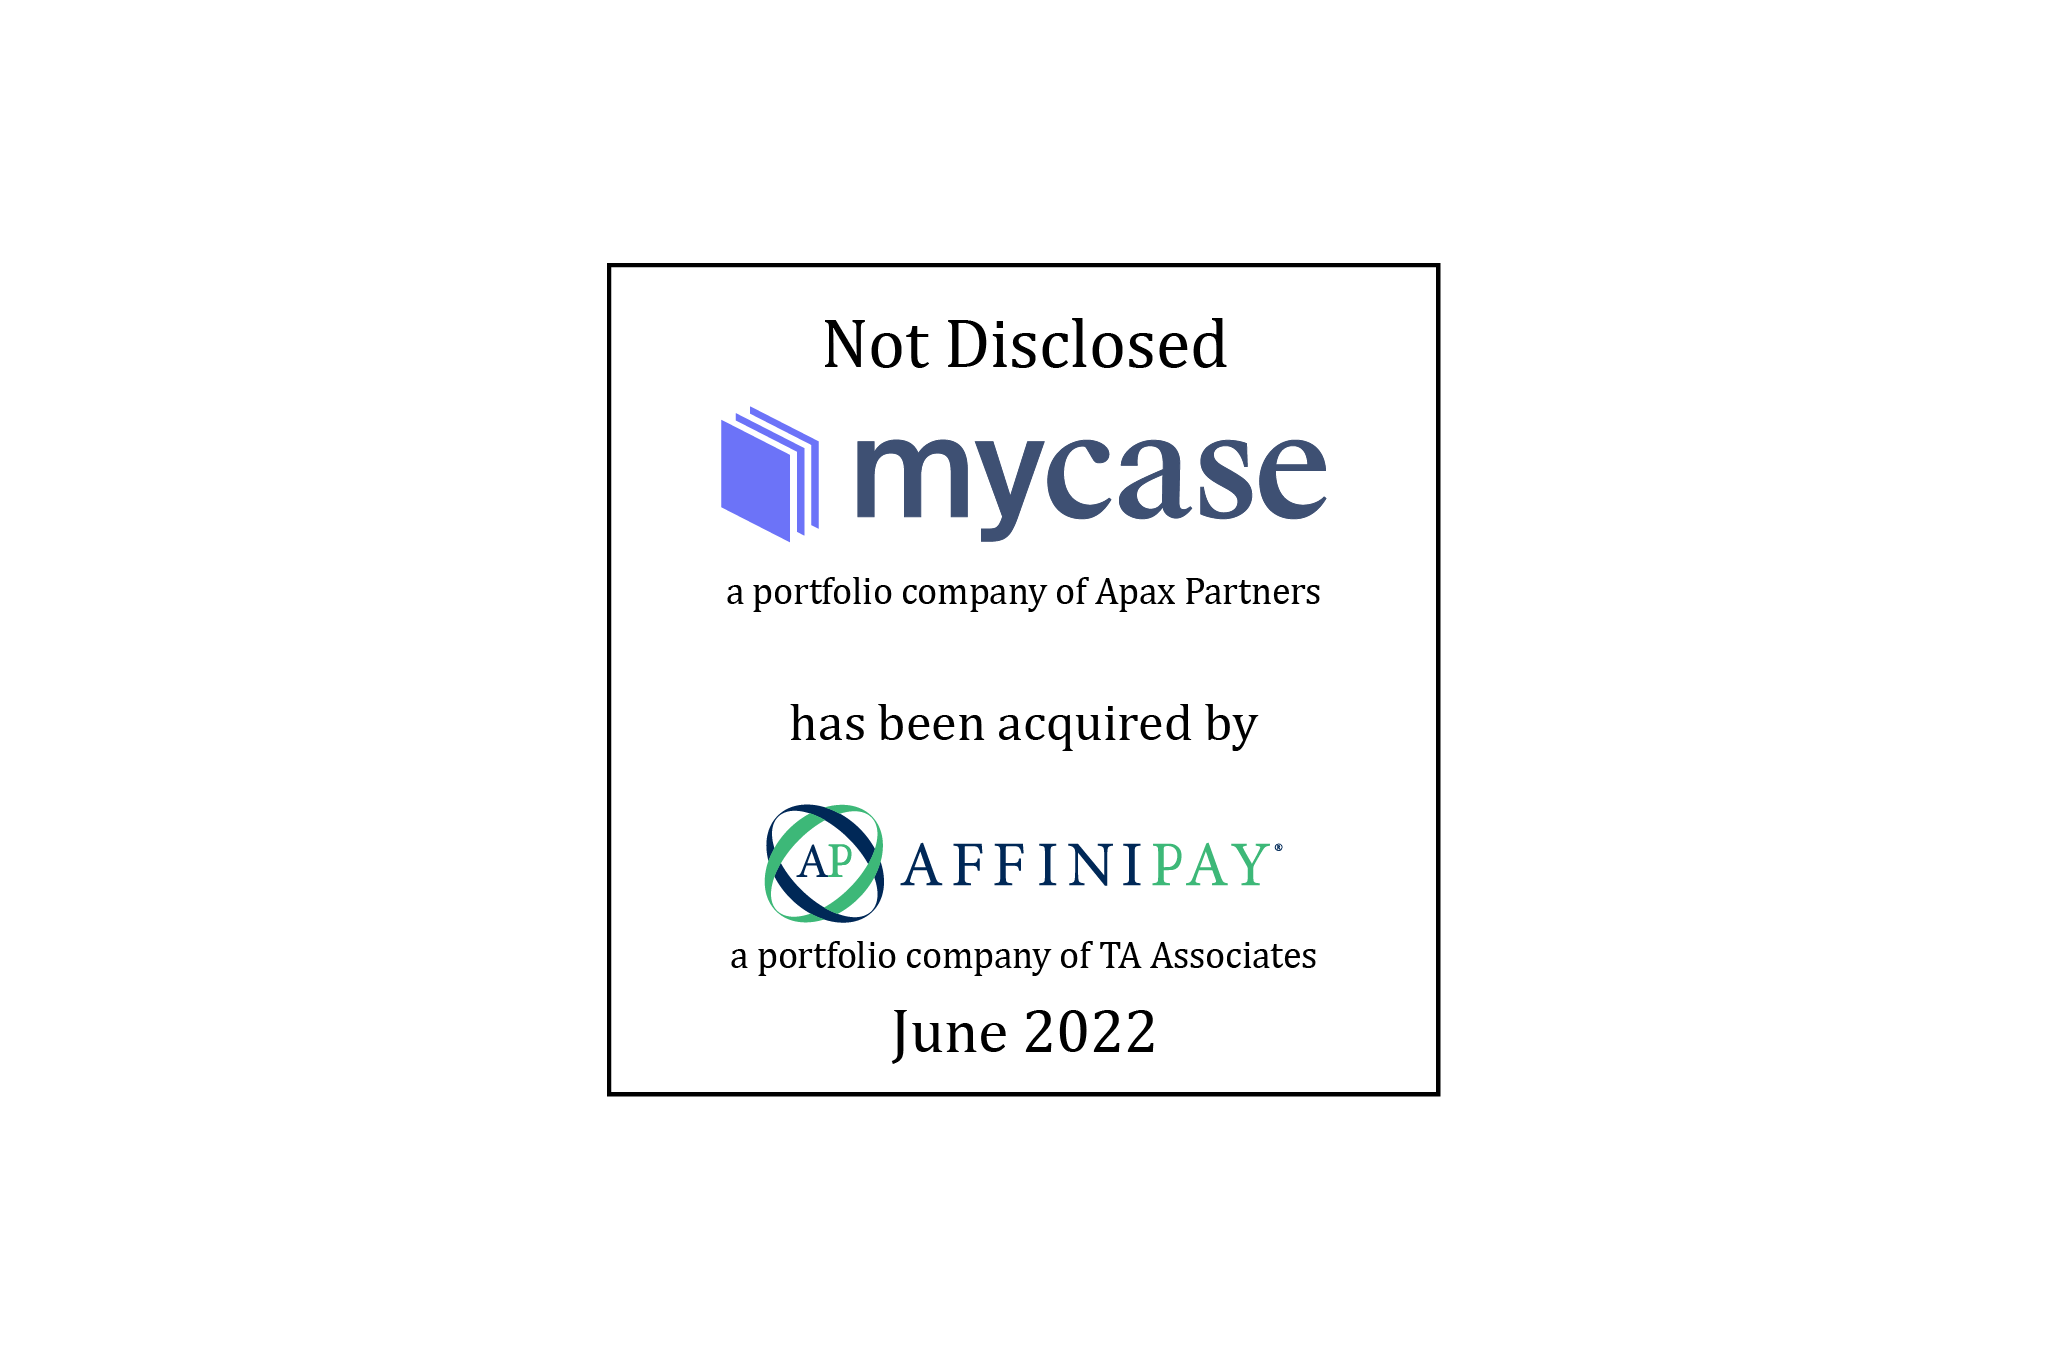 MyCase (logo), a portfolio company of Apax Partners, has Been Acquired by AffiniPay (logo), a portfolio company of TA Associates | June 2022